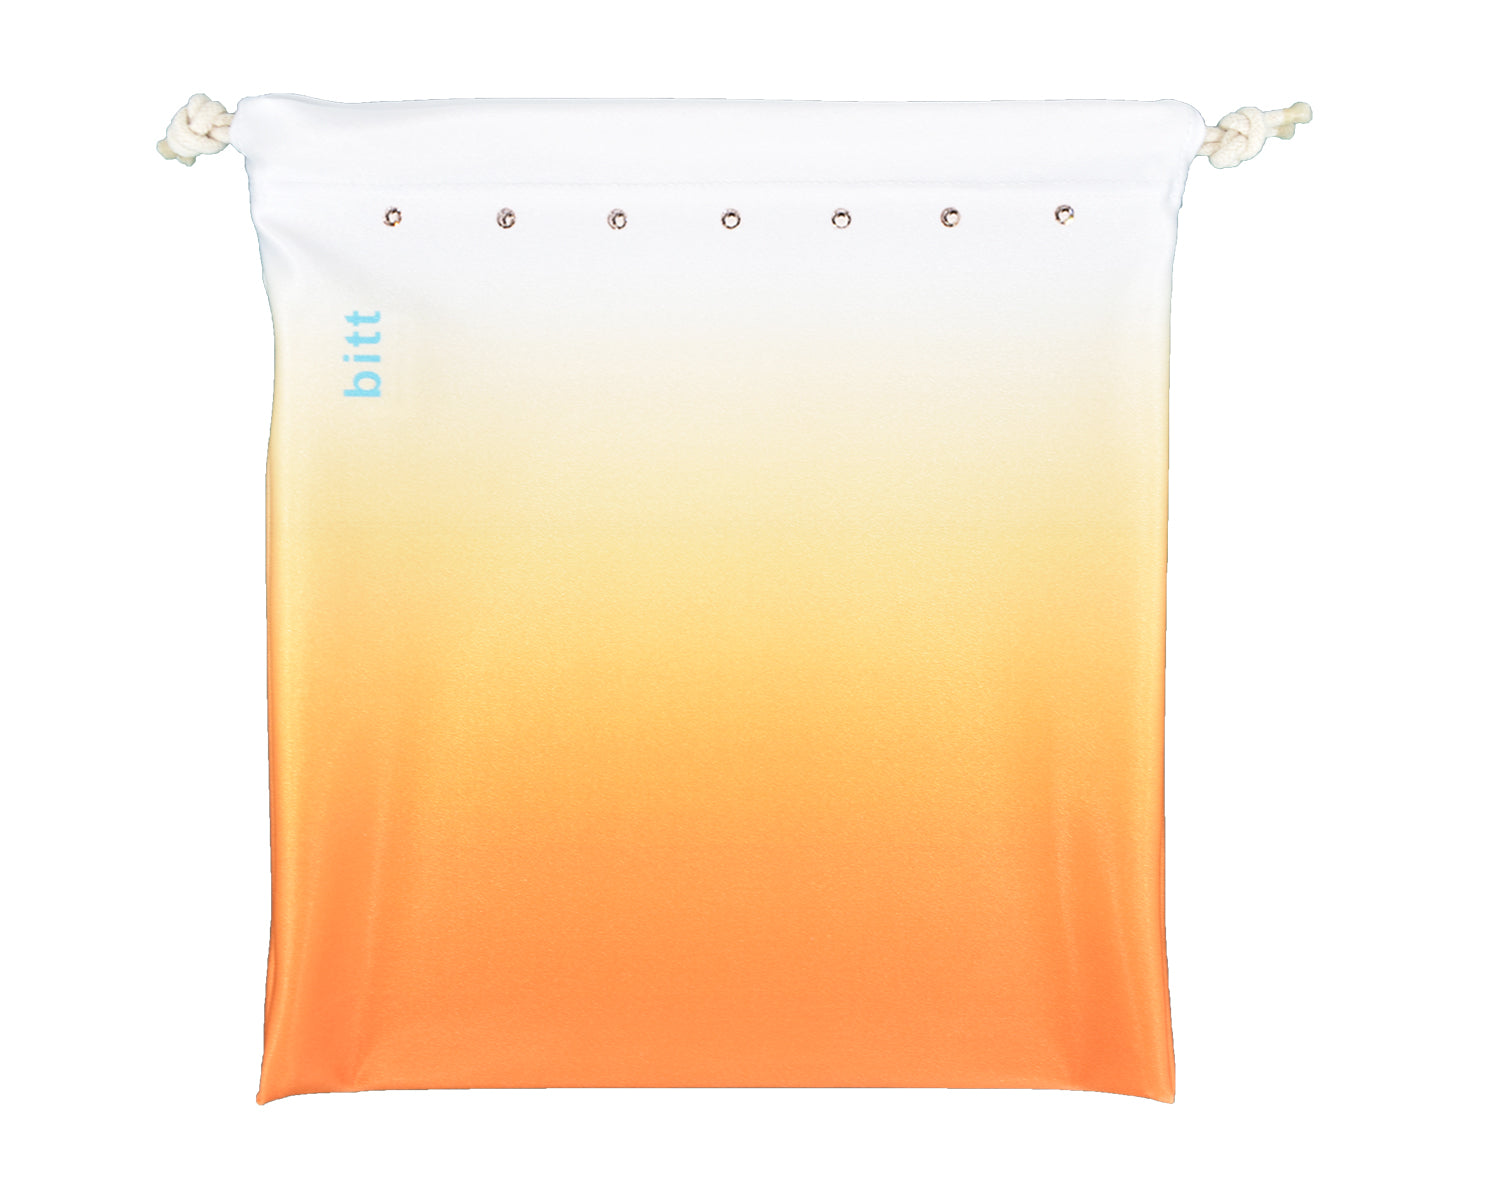 Gymnastics Grip Bag - Orange & White Ombre